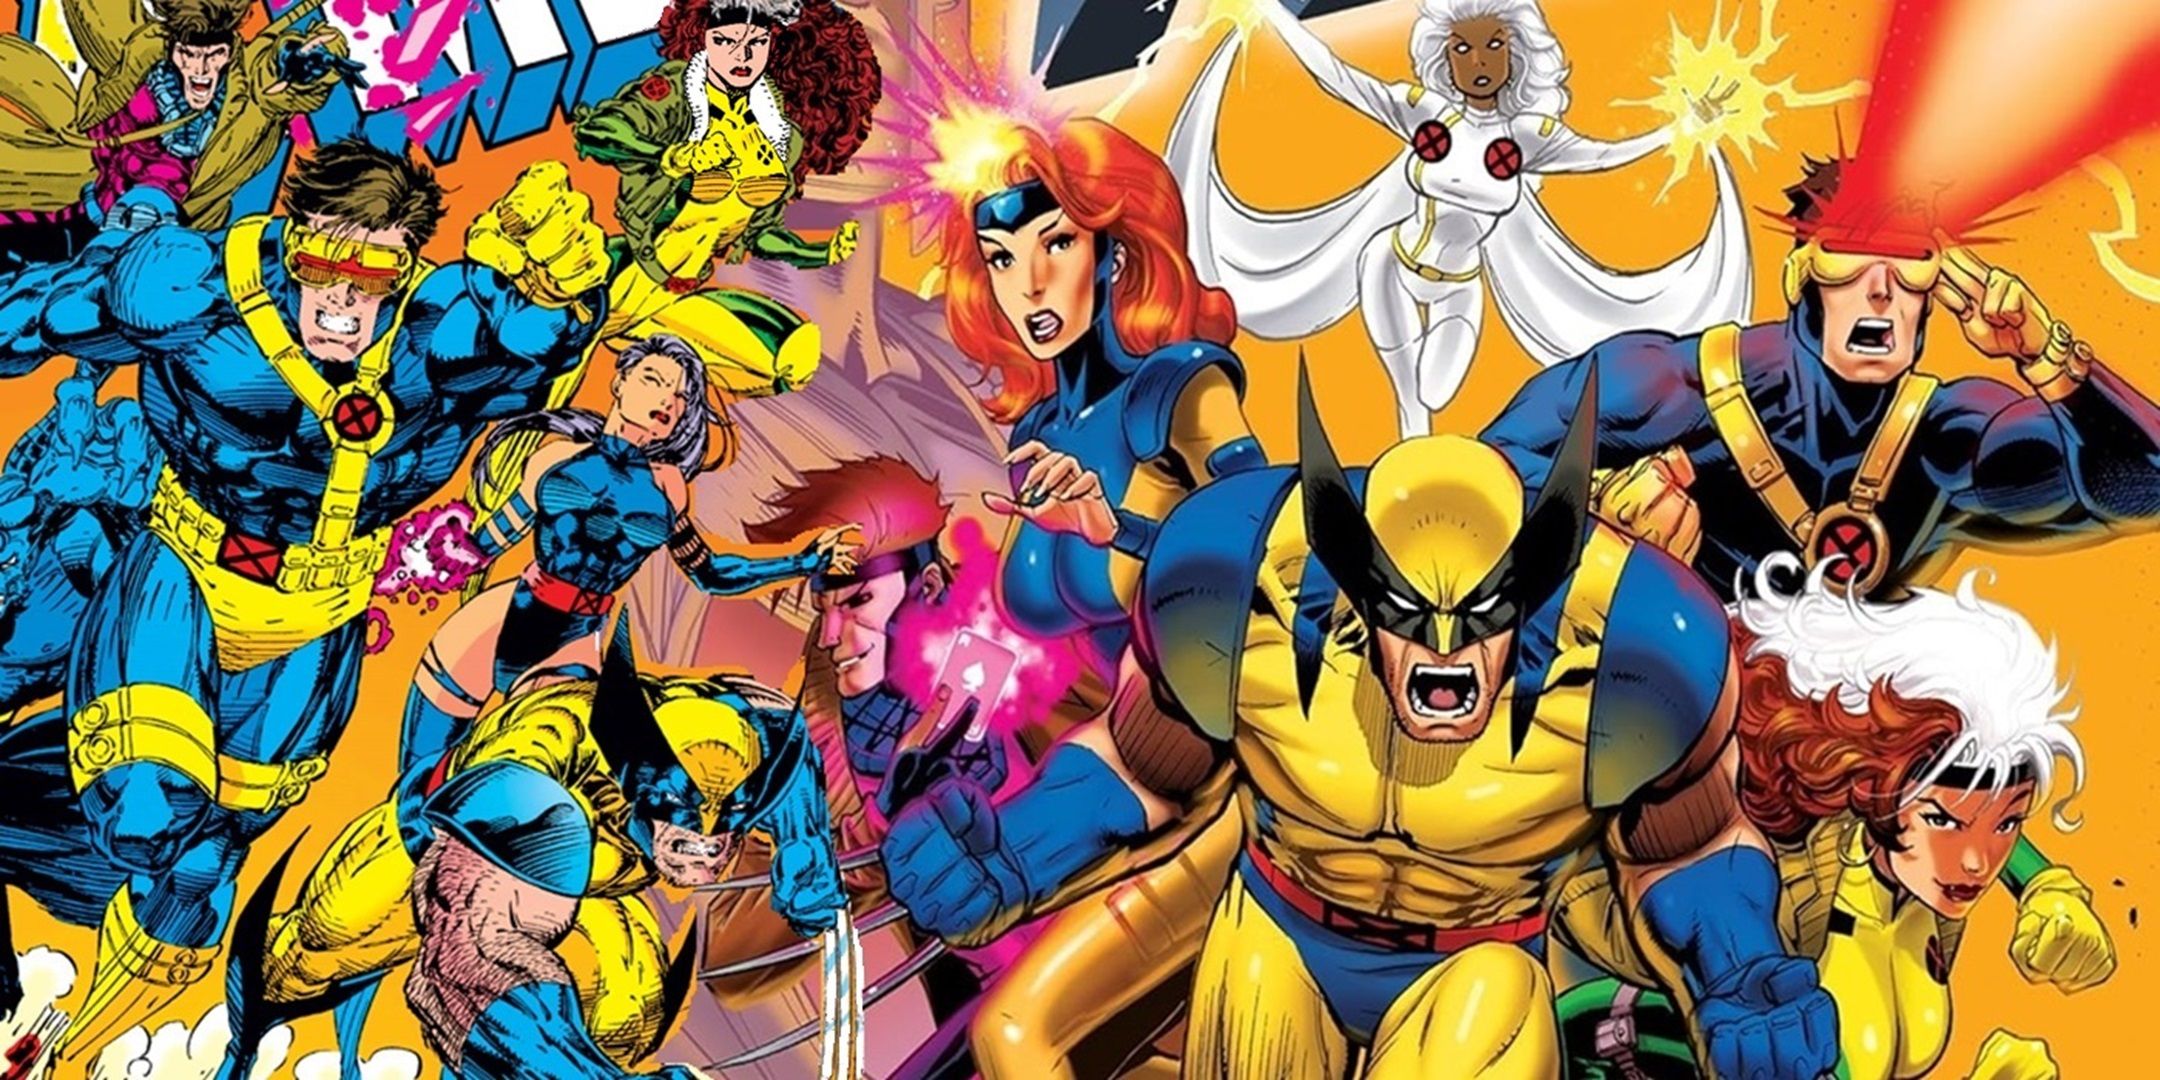 Jim Lee's X-Men next to the X-Men: The Animated Series X-Men